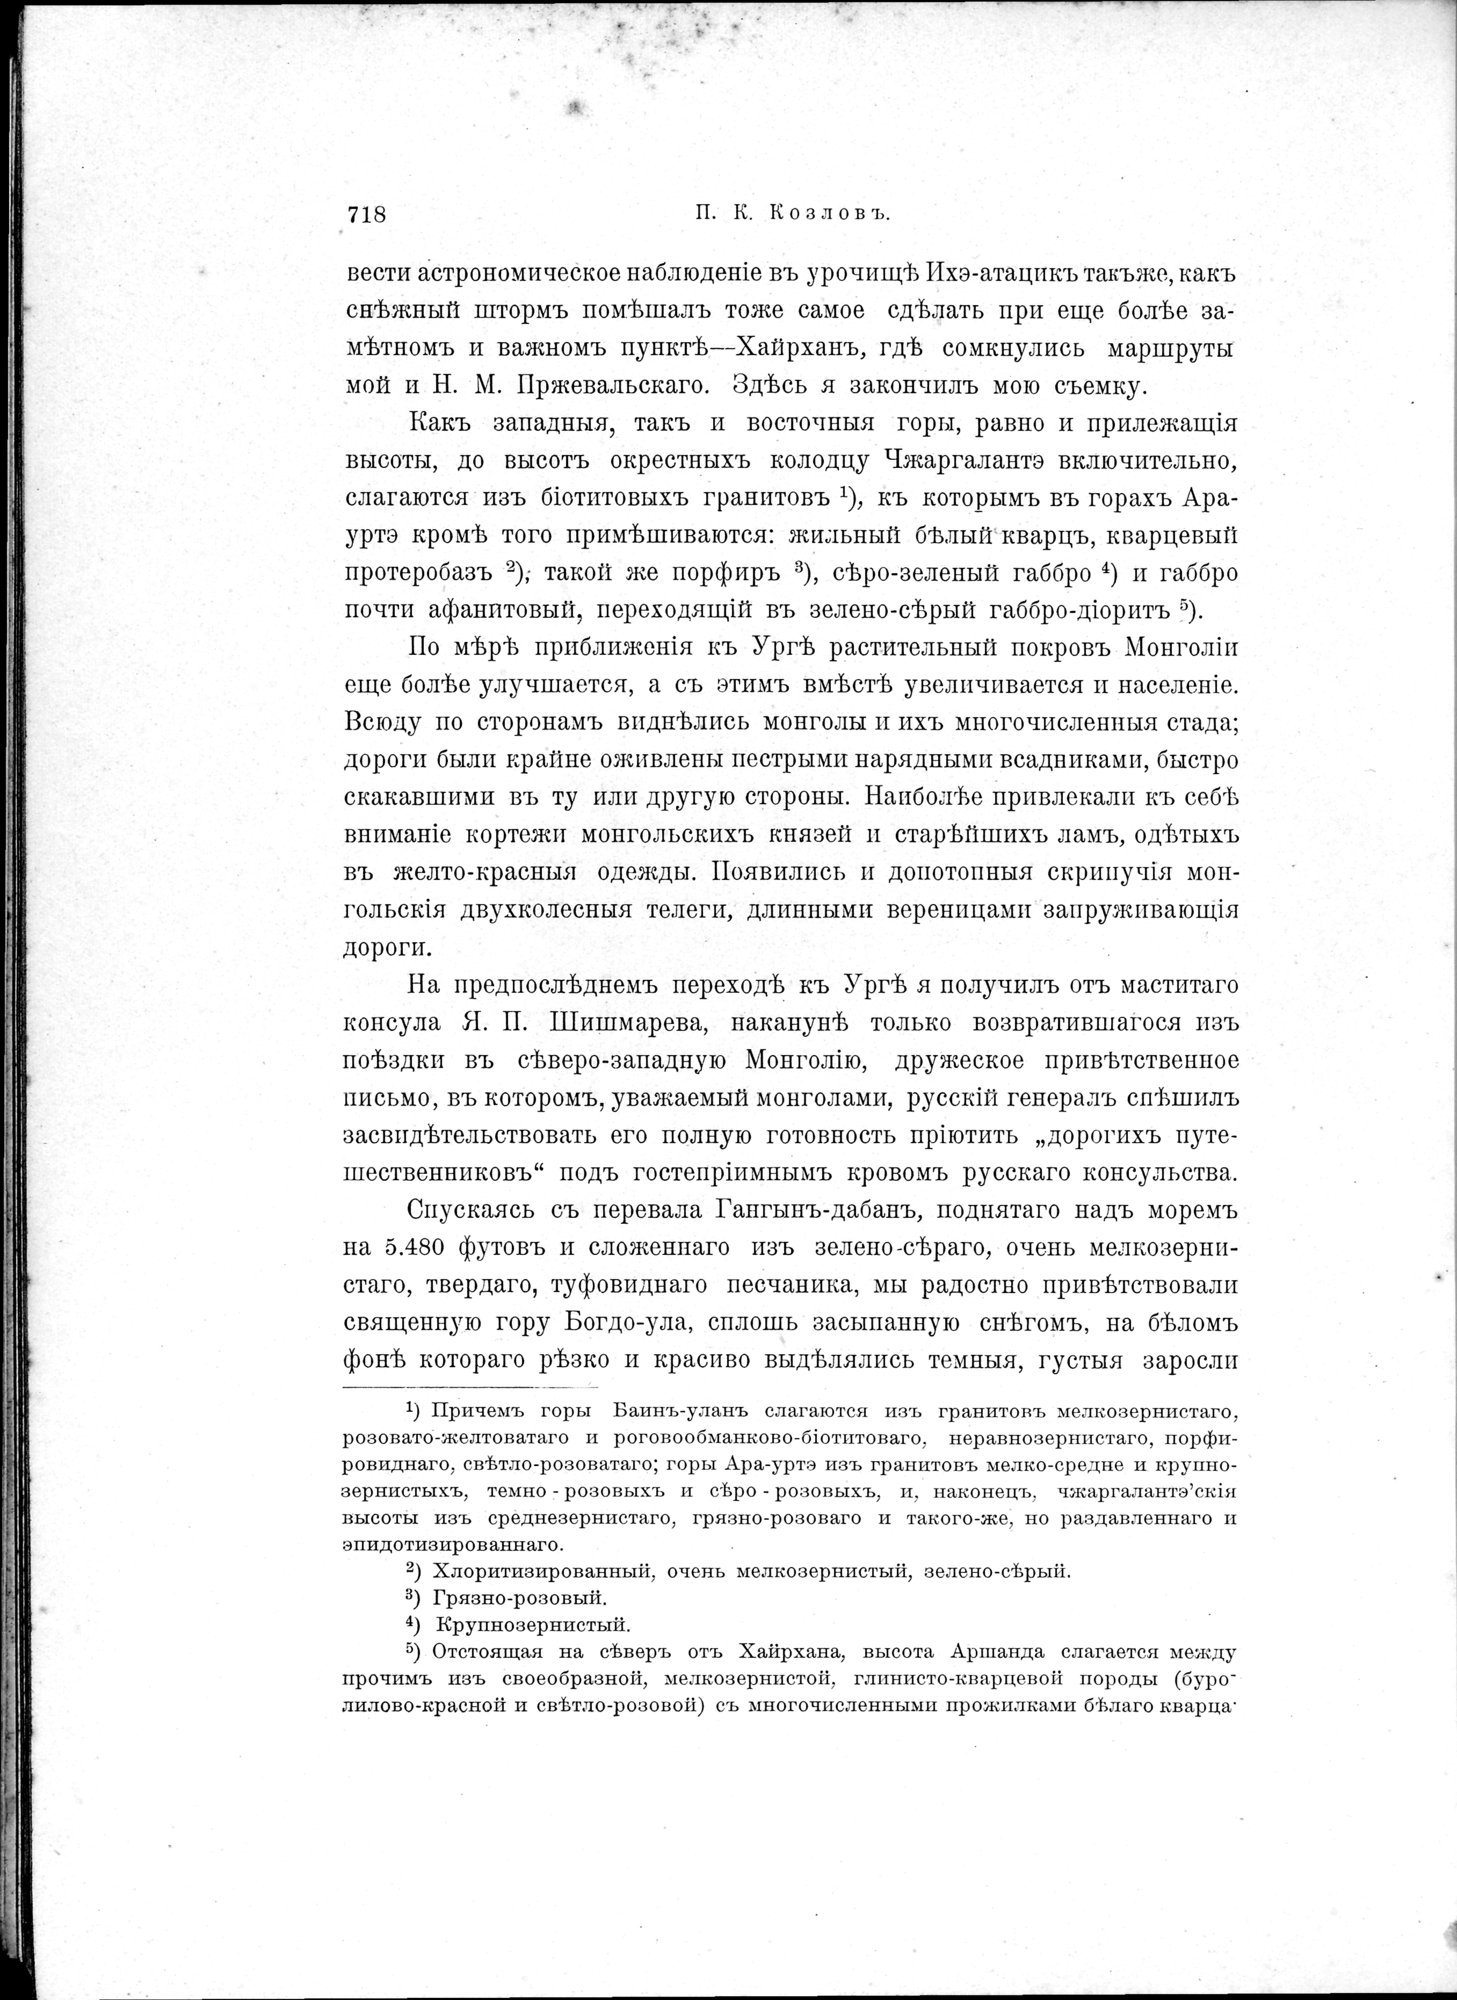 Mongoliia i Kam : vol.2 / Page 556 (Grayscale High Resolution Image)